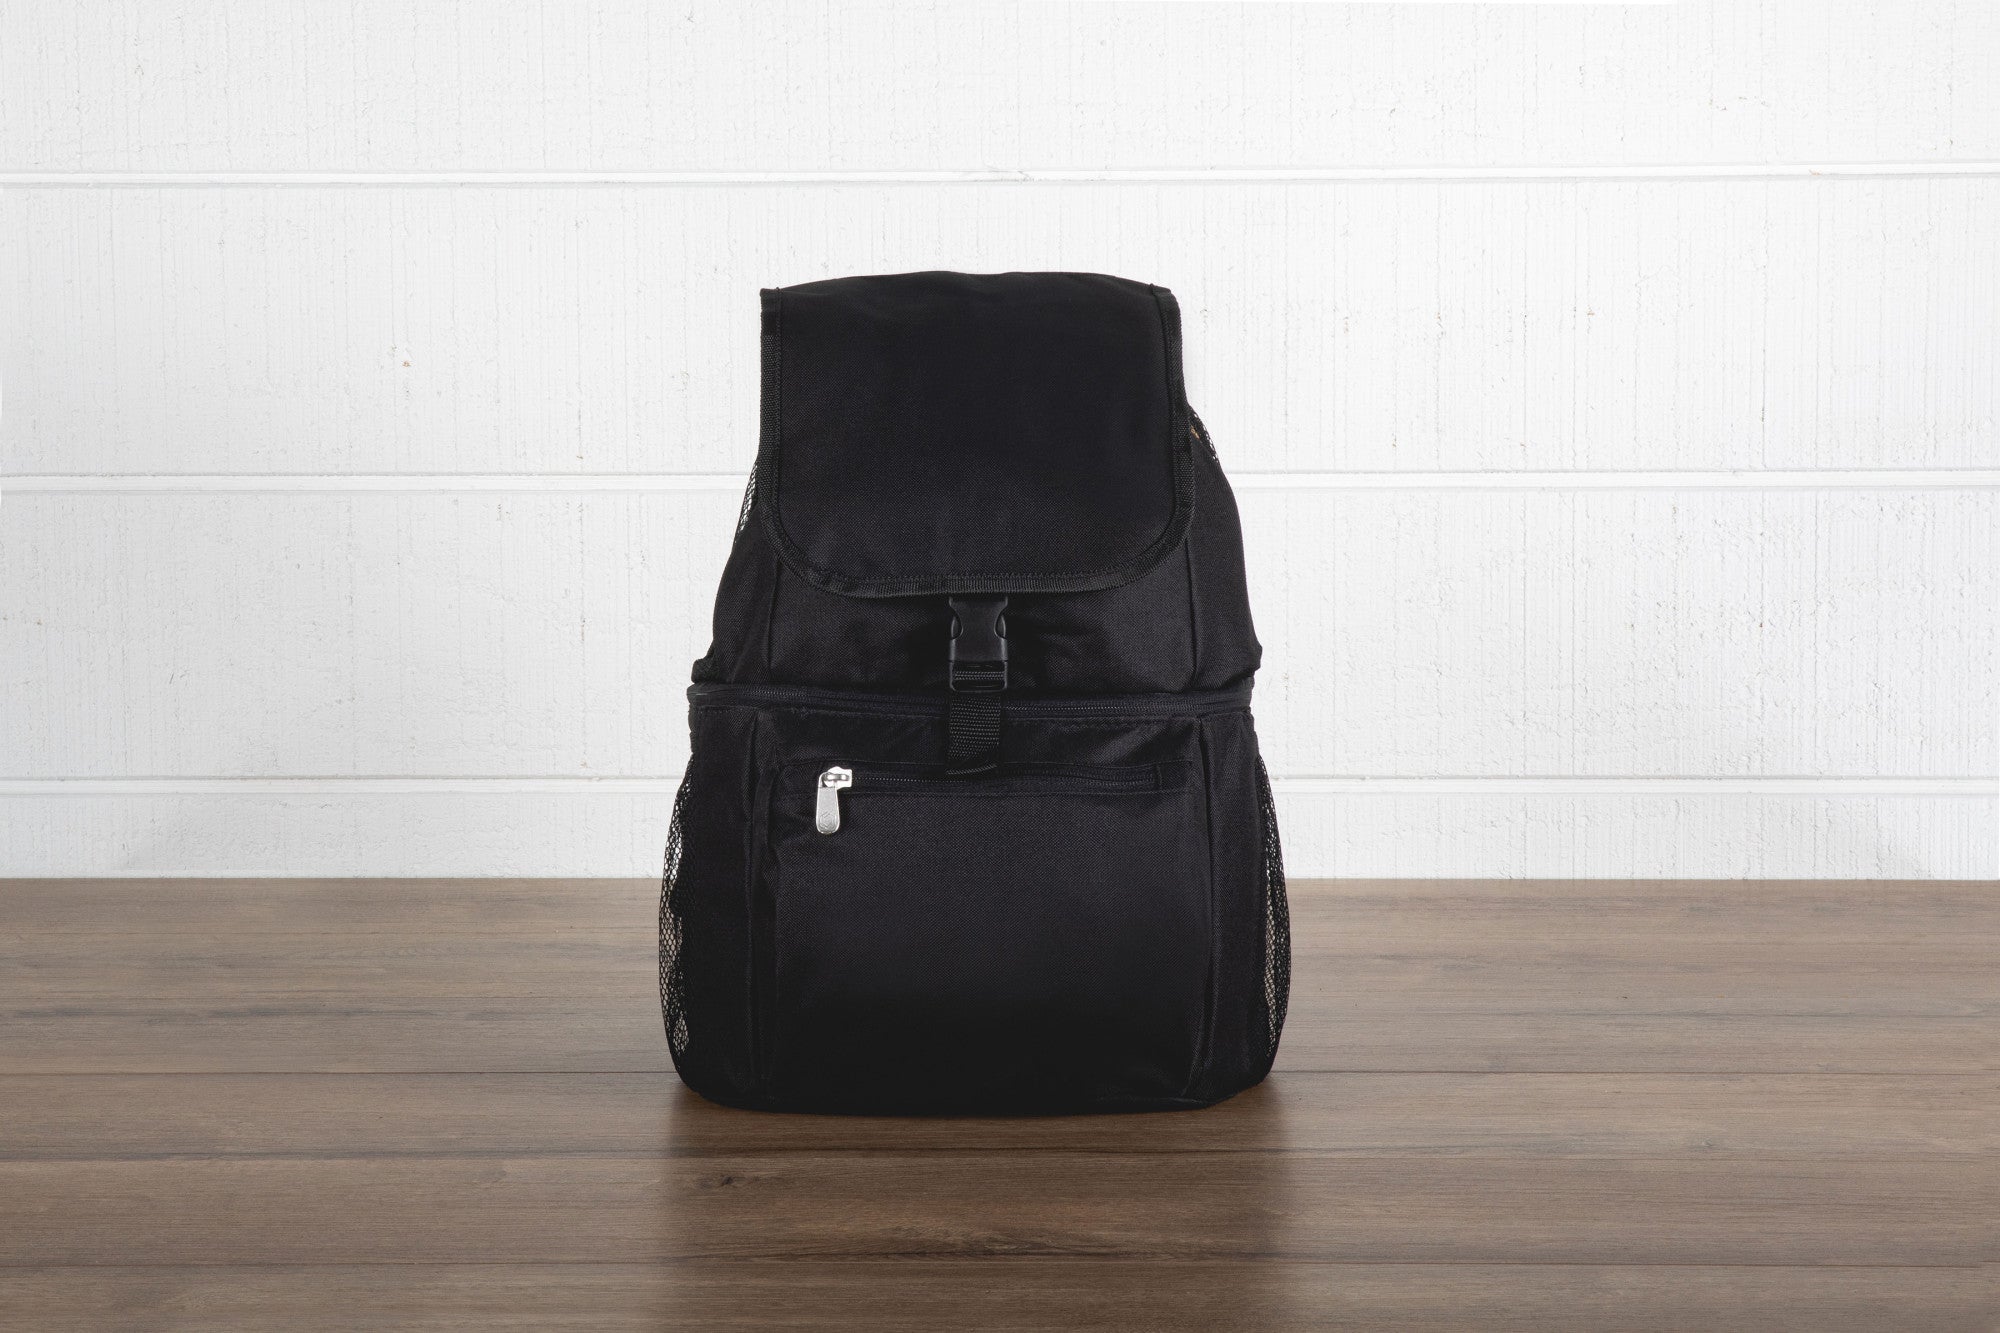 Picnic Time Zuma Backpack Cooler - Black